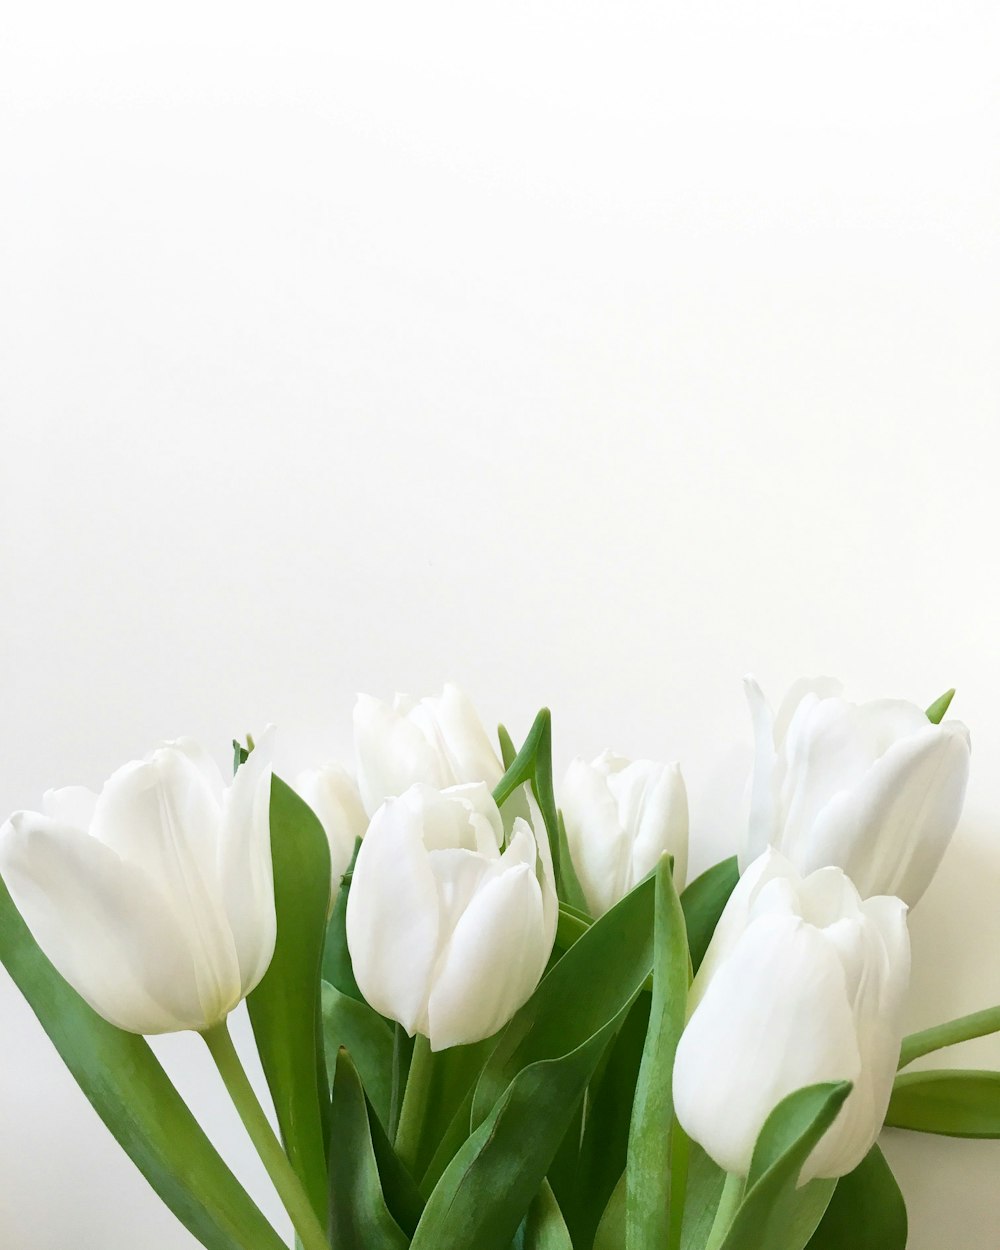 Tulipes blanches sur fond blanc